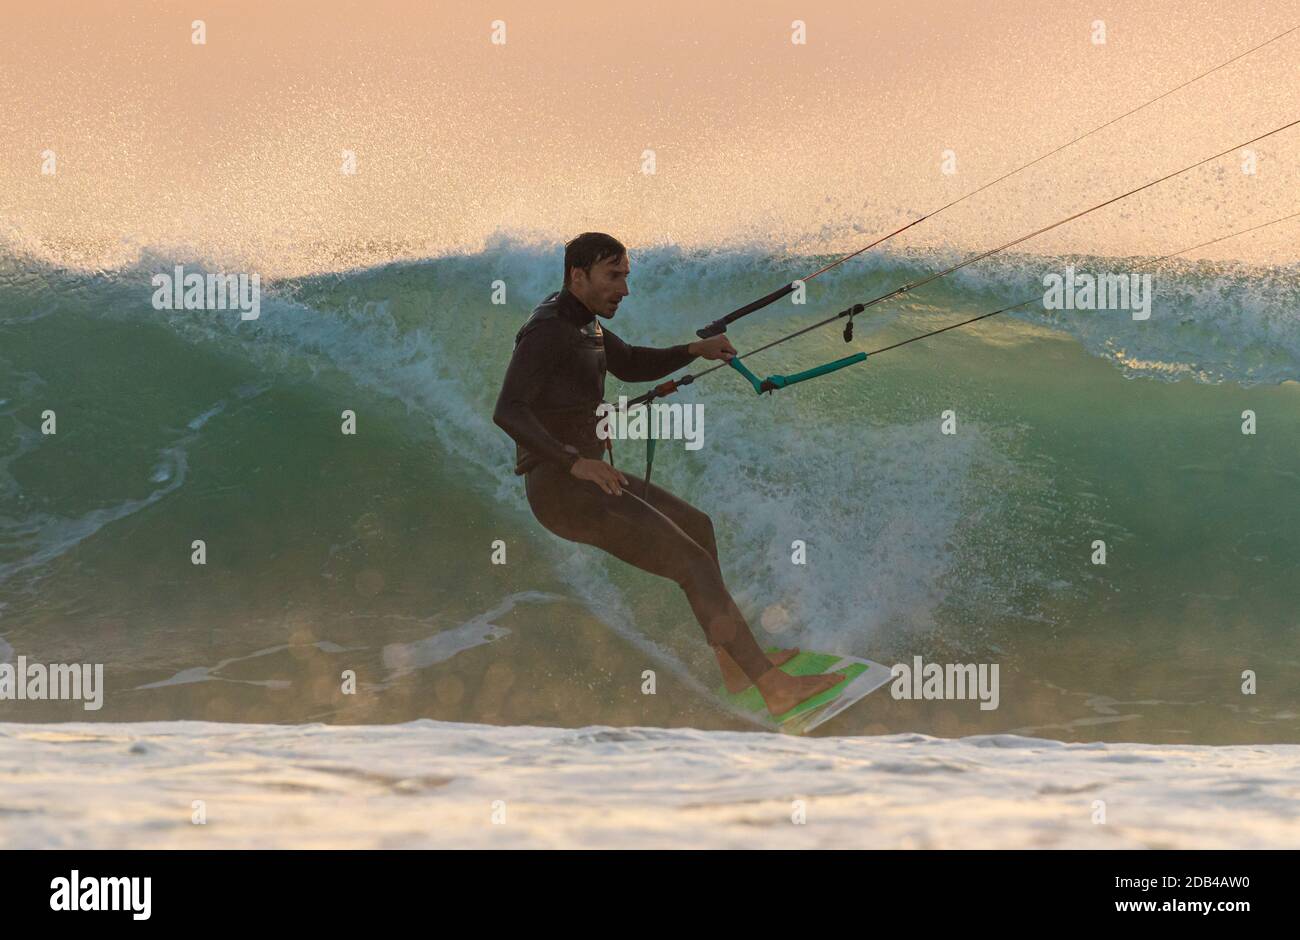 Kitesurf in Waves, Tarifa, Costa de la Luz, Cadix, Andalousie, Espagne. Banque D'Images